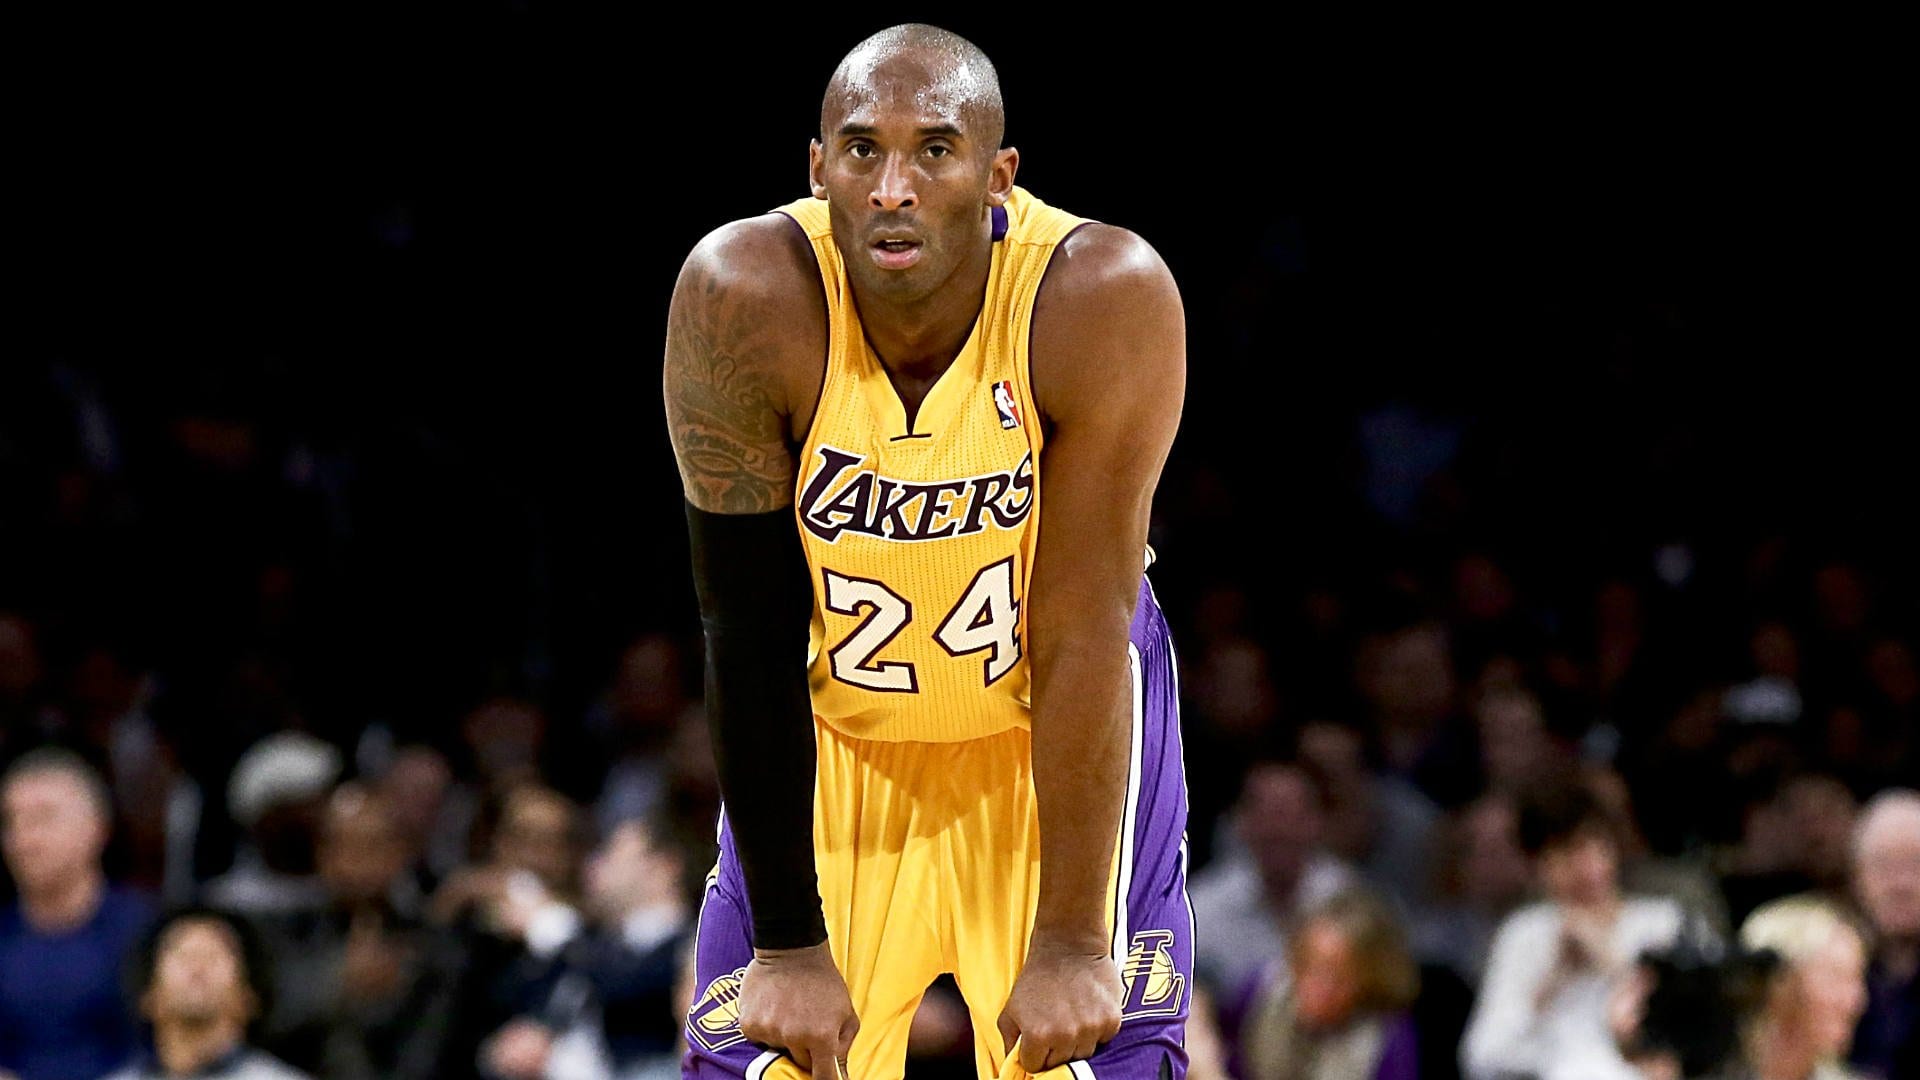 Kobe Bryant of the Lakers